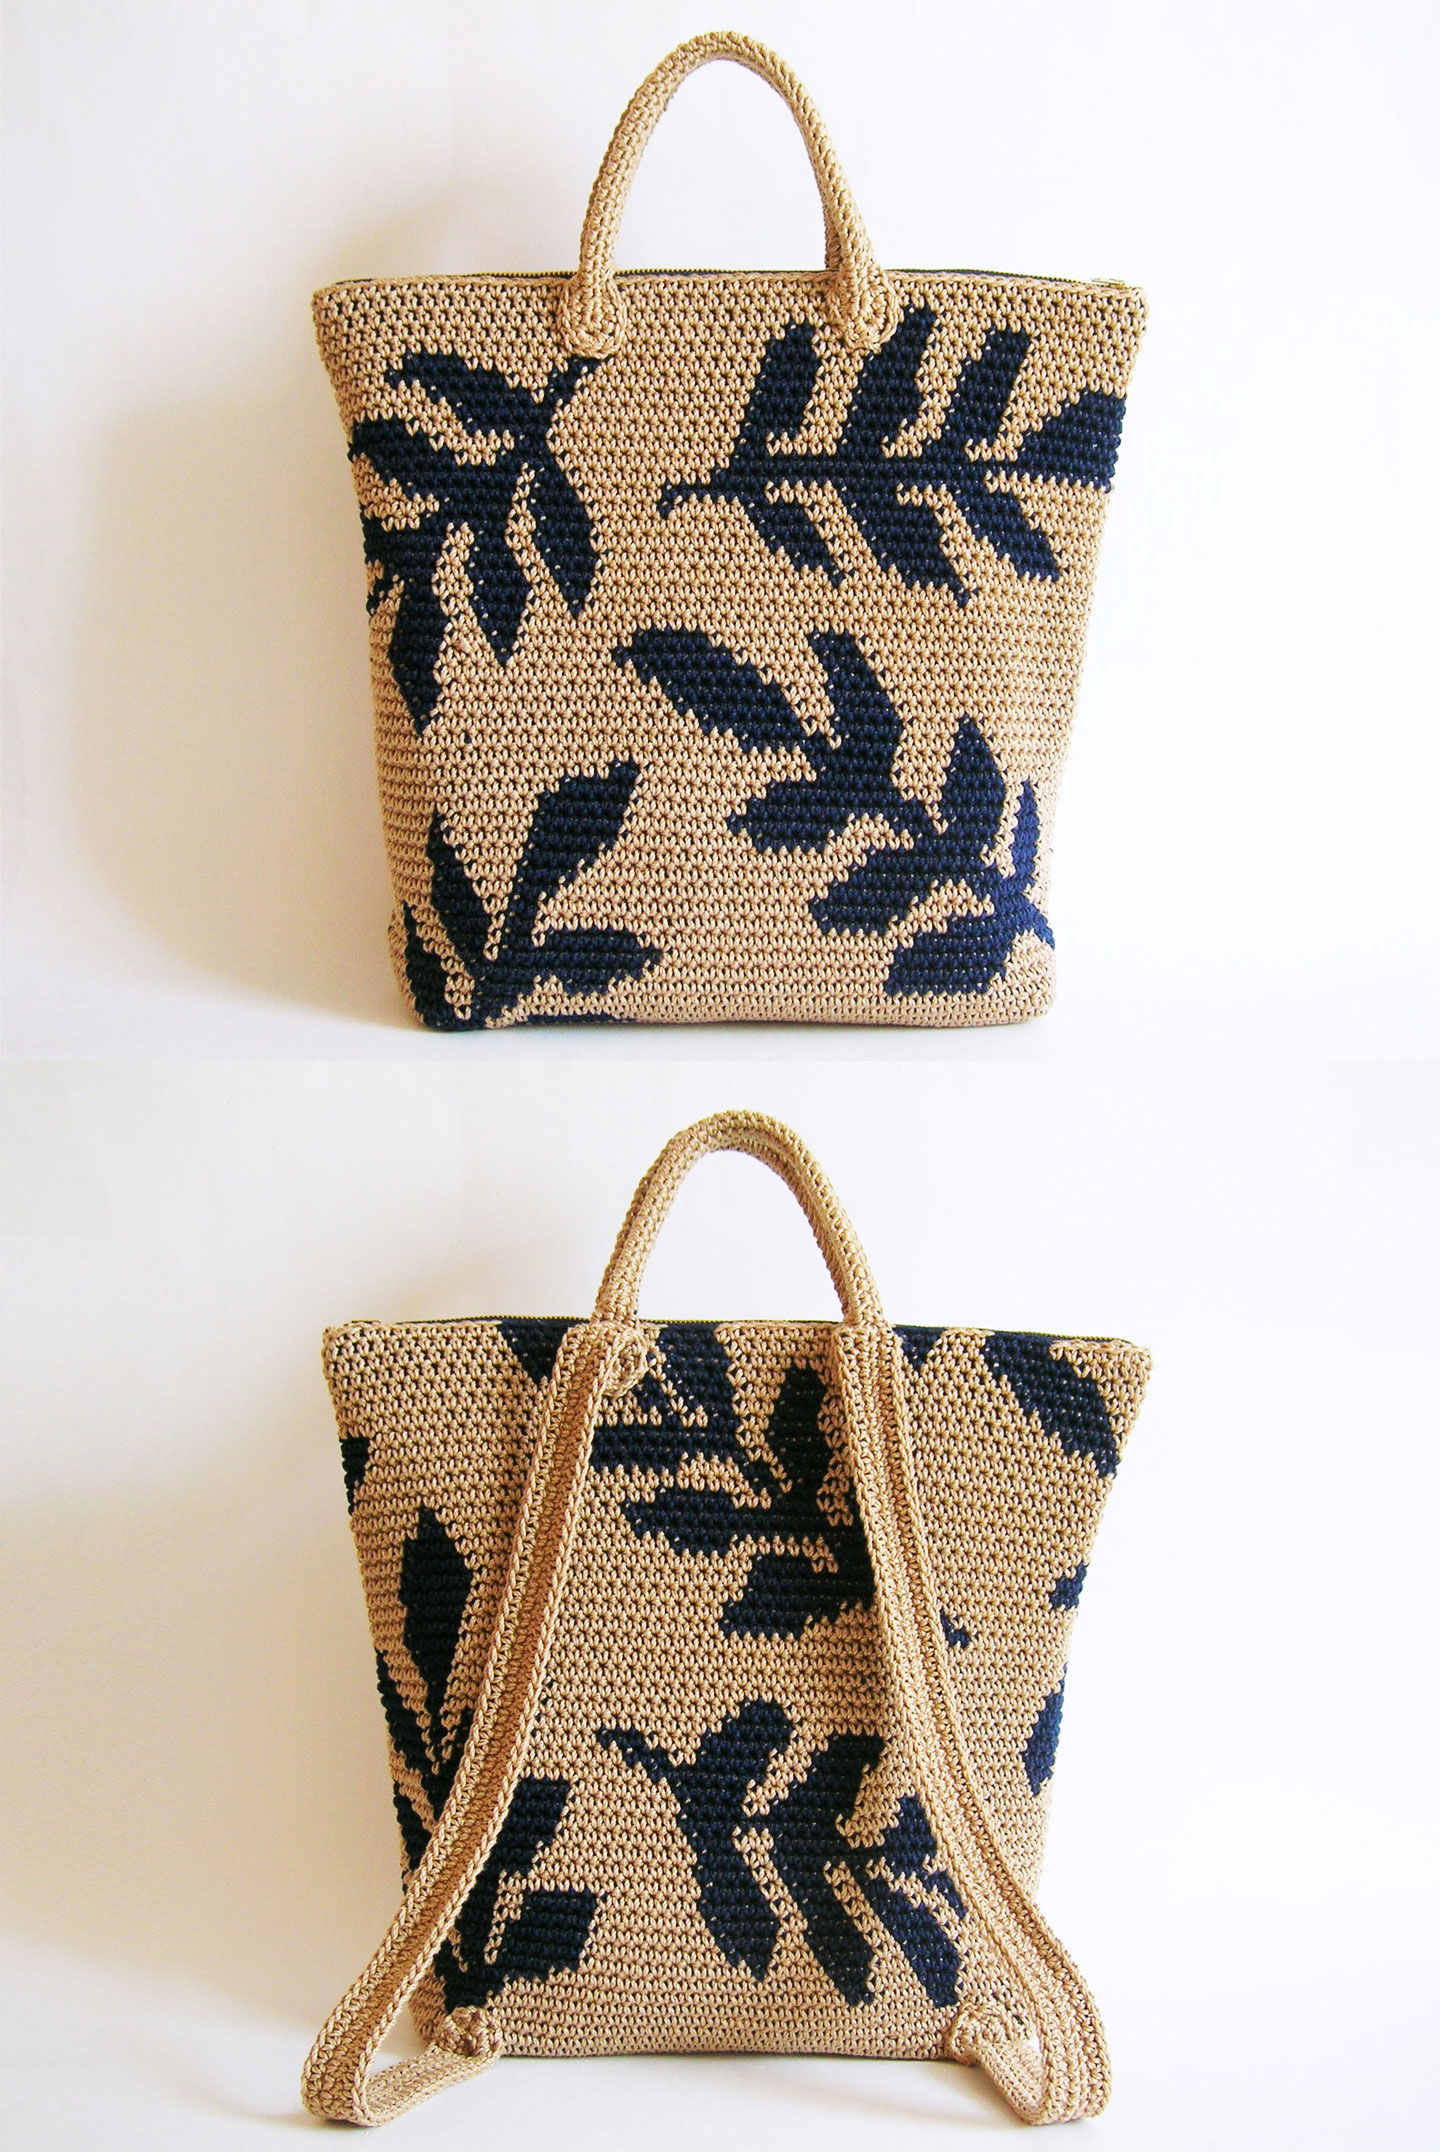 Leaves backpack pattern/ Patrón para mochila de hojas | Chabepatterns